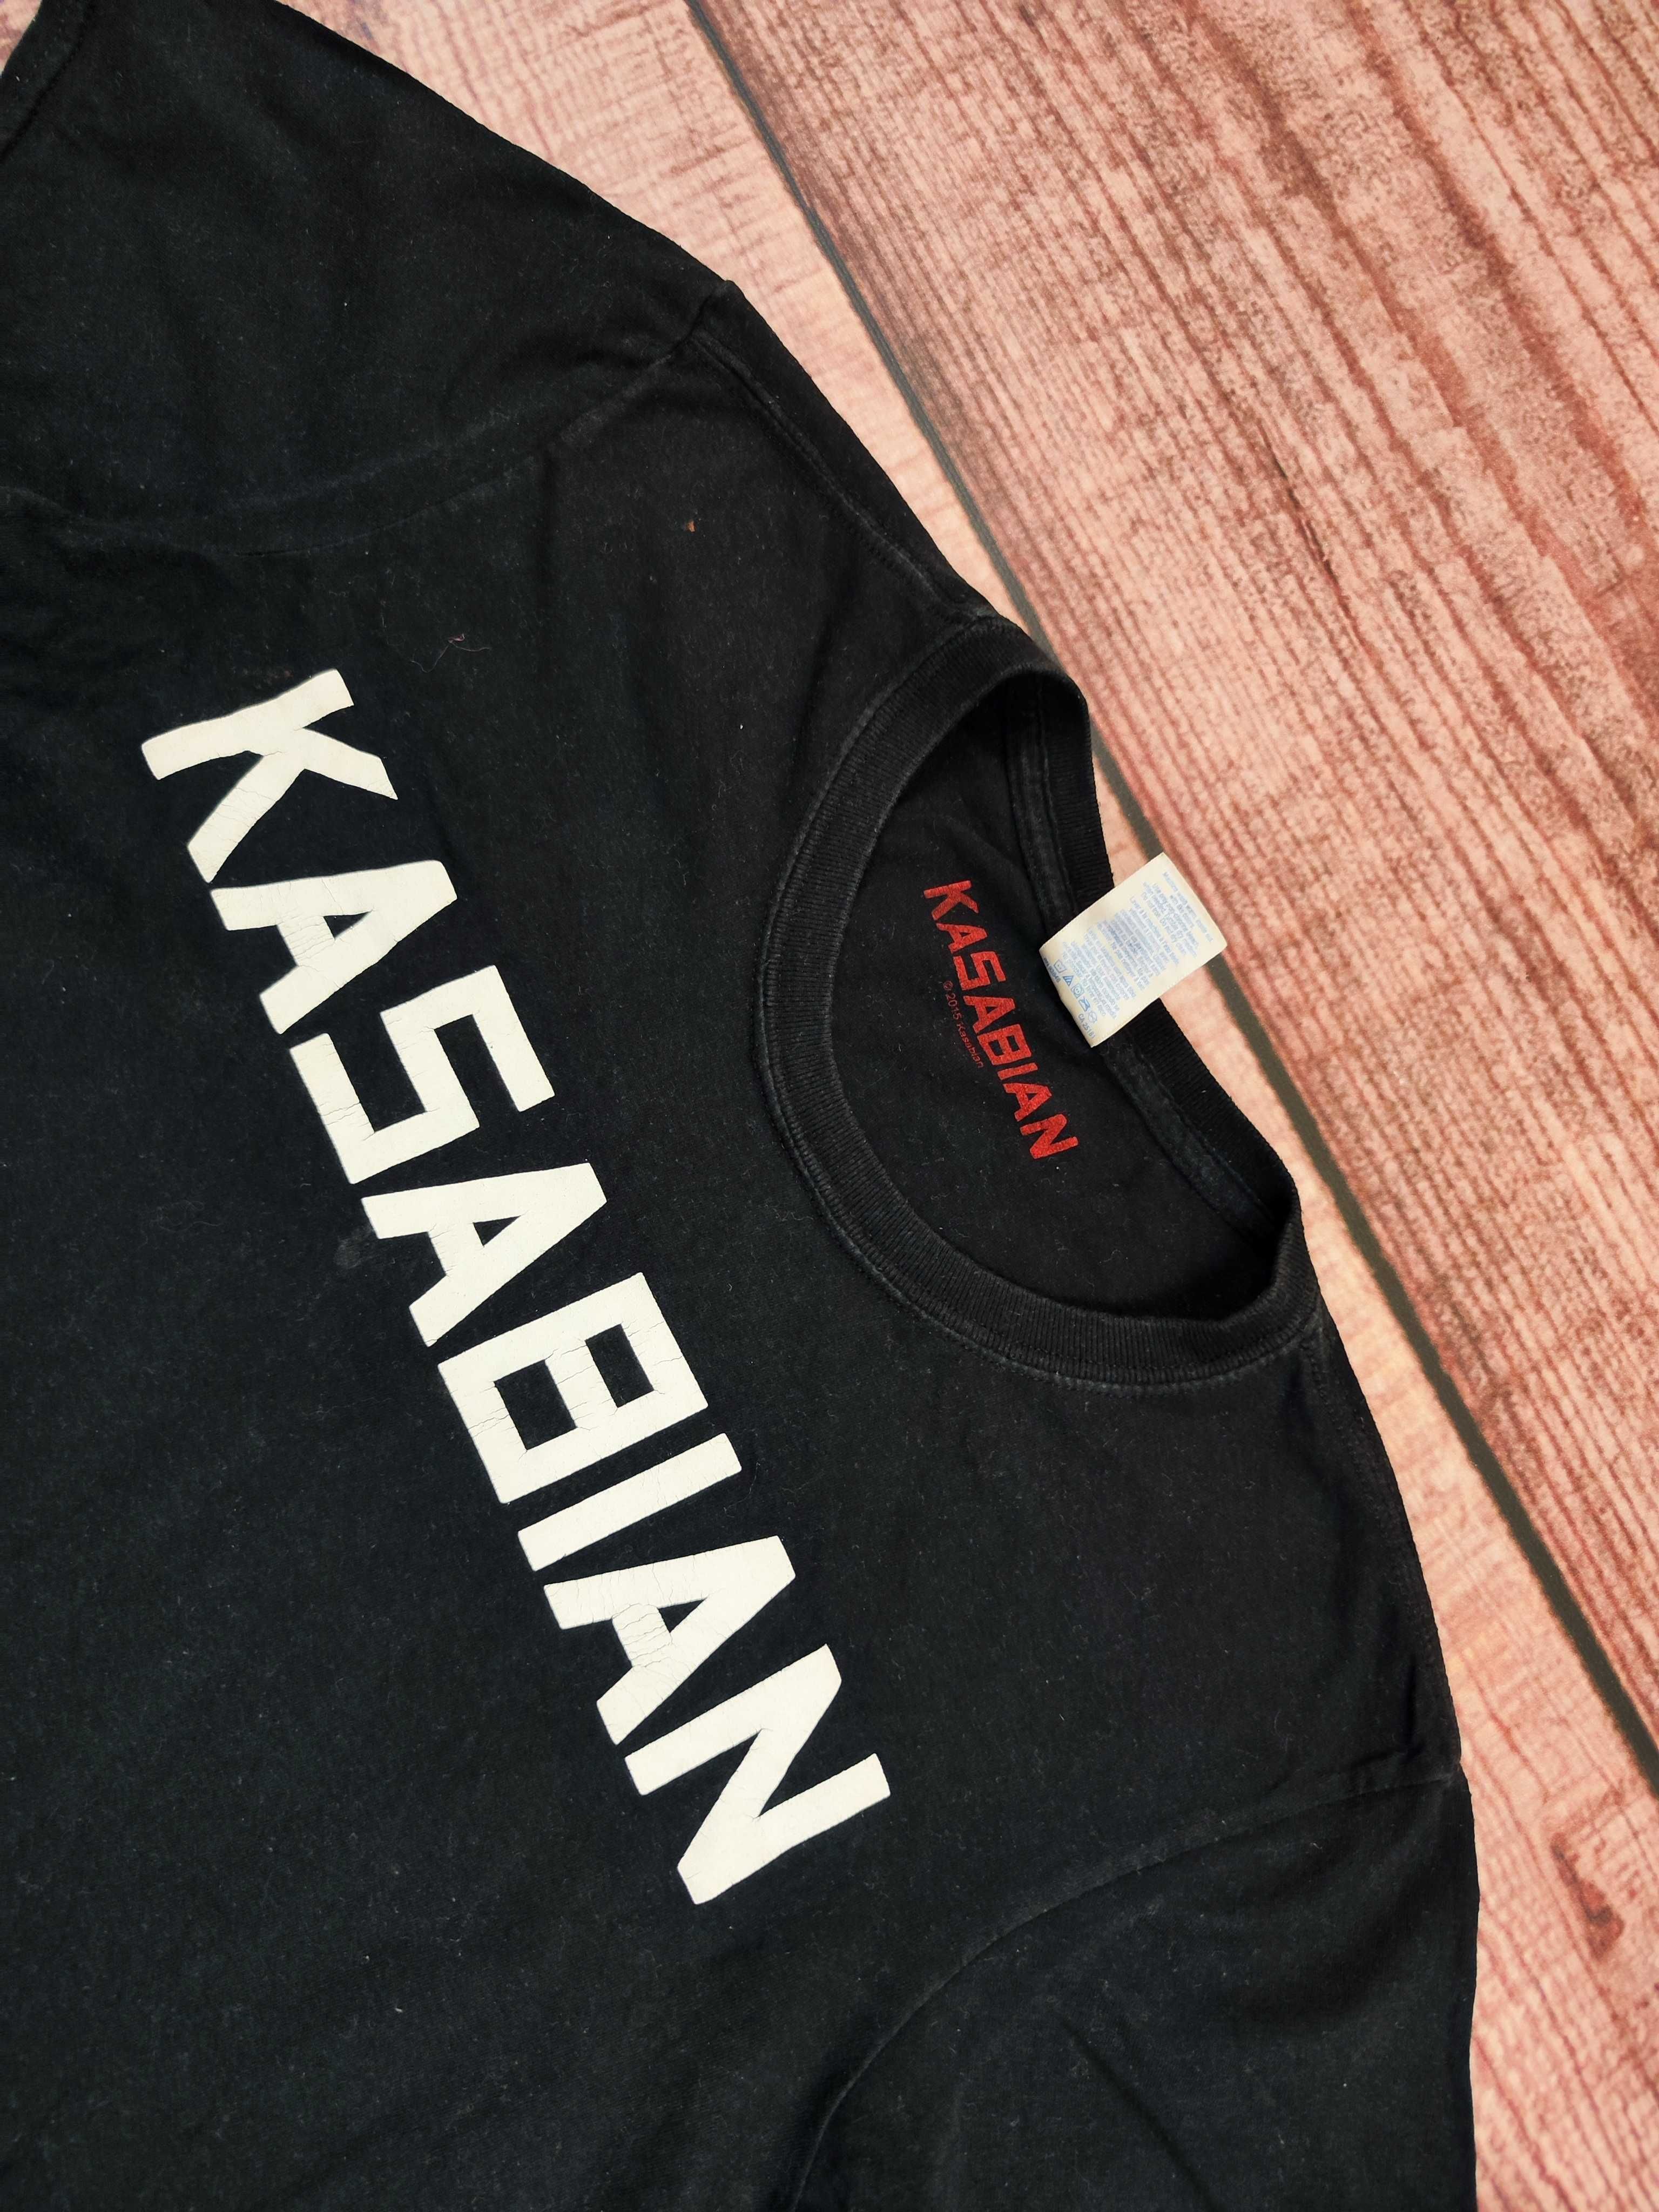 Koszulka T-shirt Kasabian music rock metal r. M